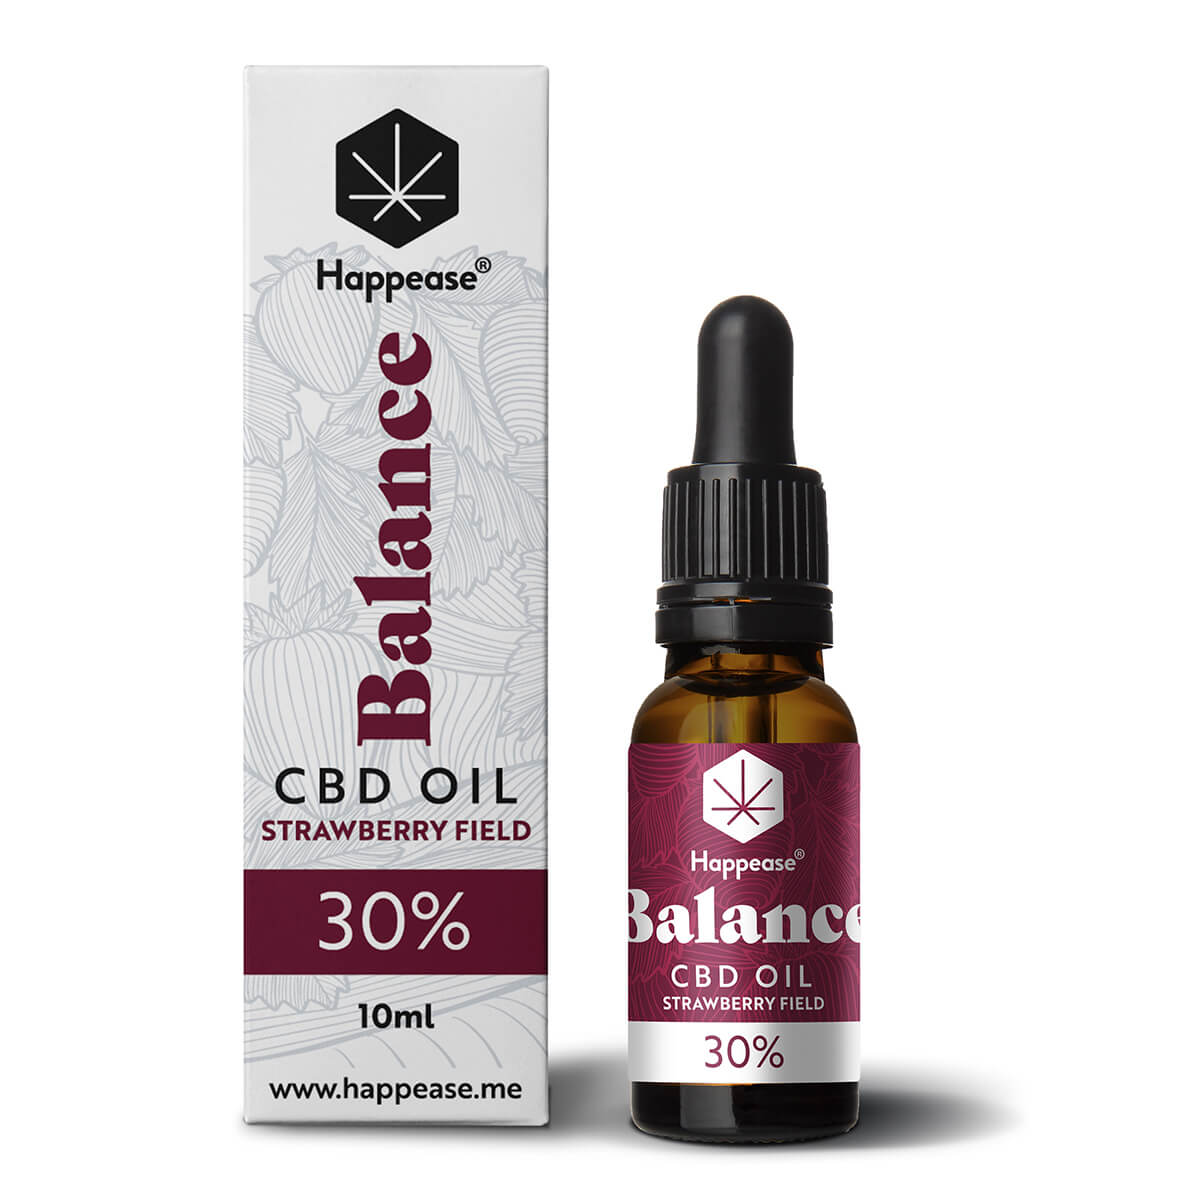 Happease Balance 30% CBD Oil Strawberry Field (10ml)